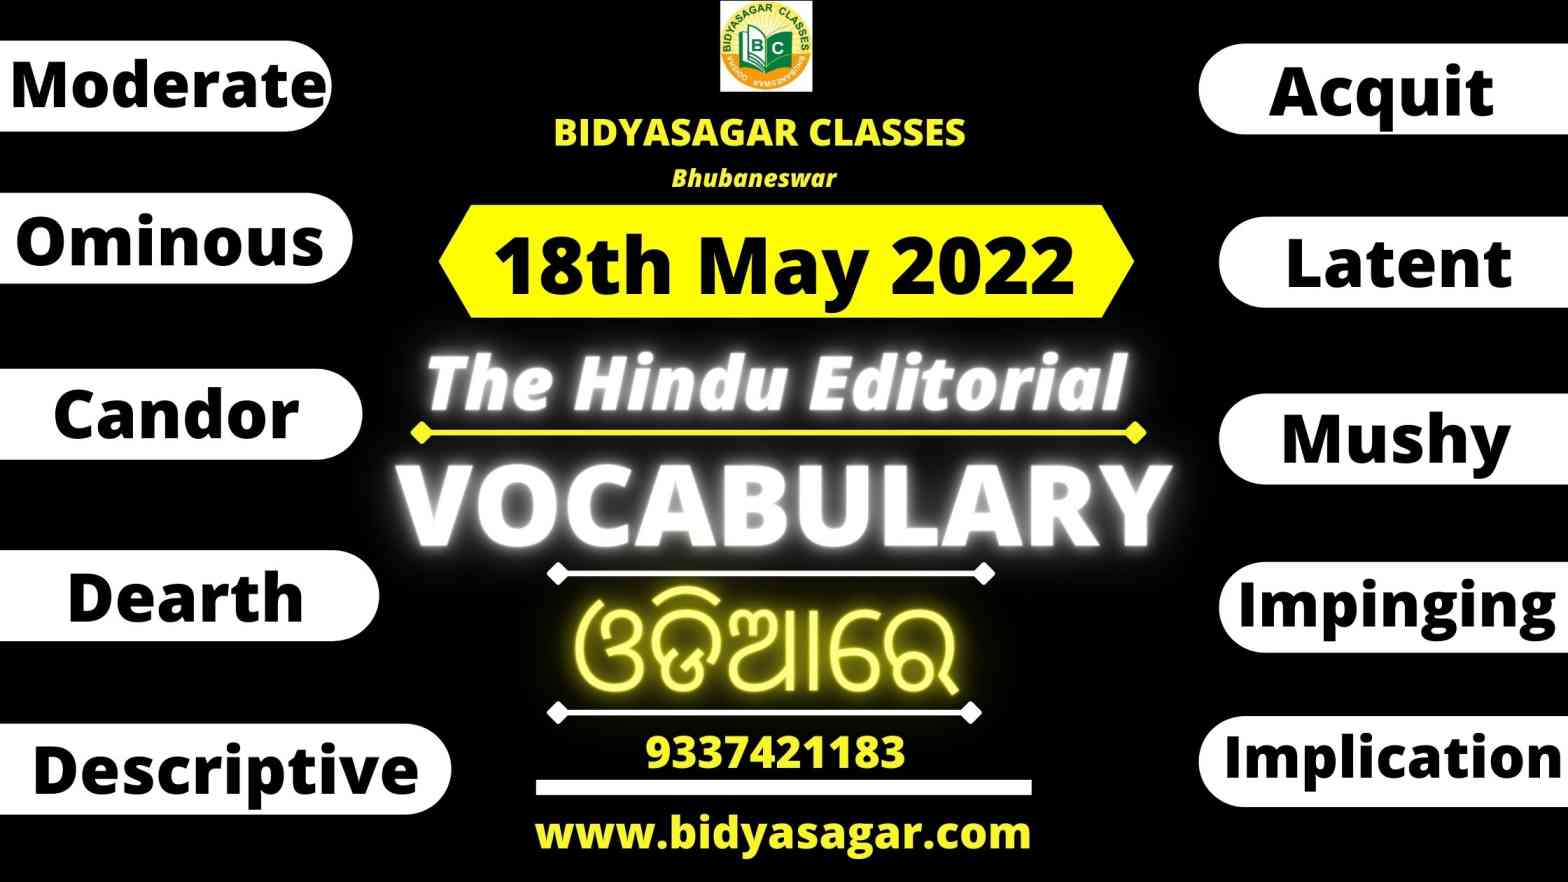 The Hindu Editorial Vocabulary of 18th May 2022